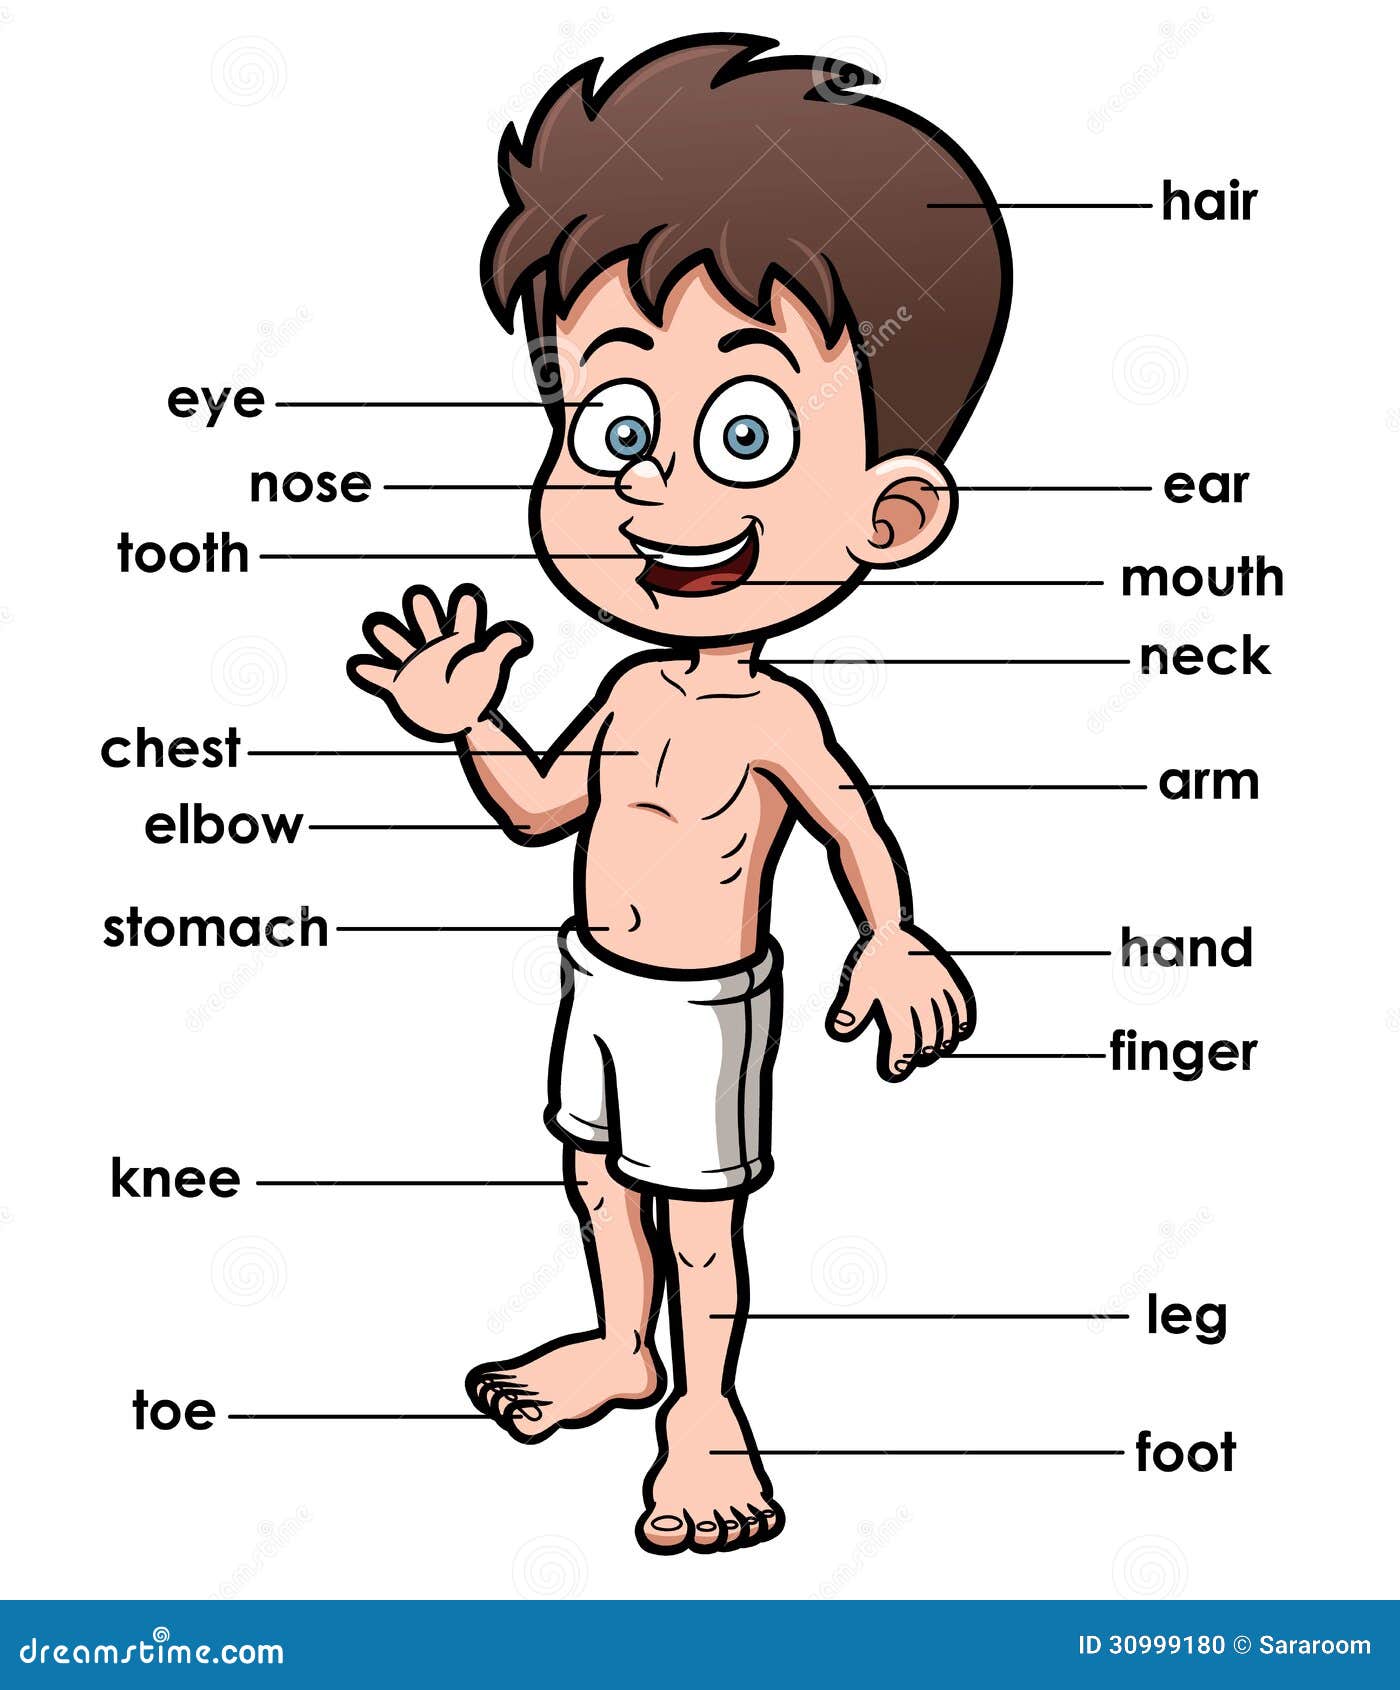 vocabulary part of body